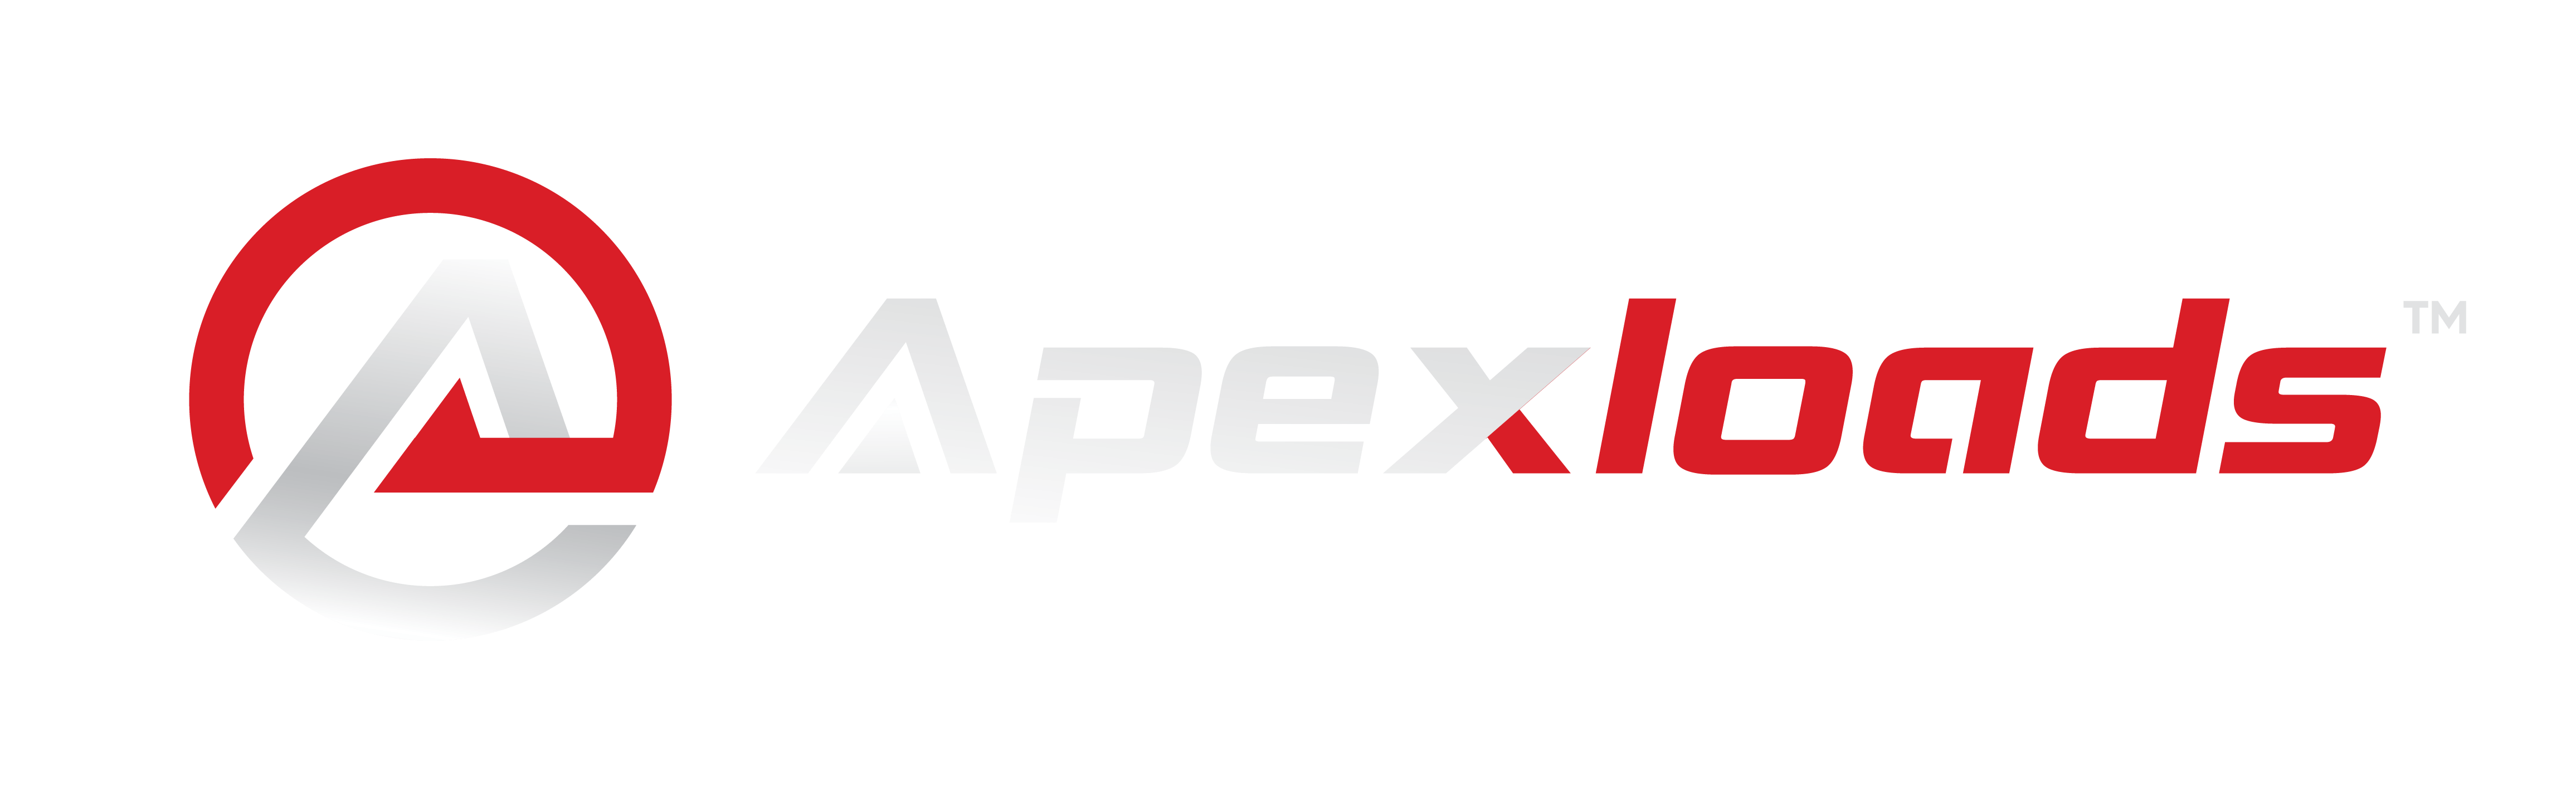 apexloads